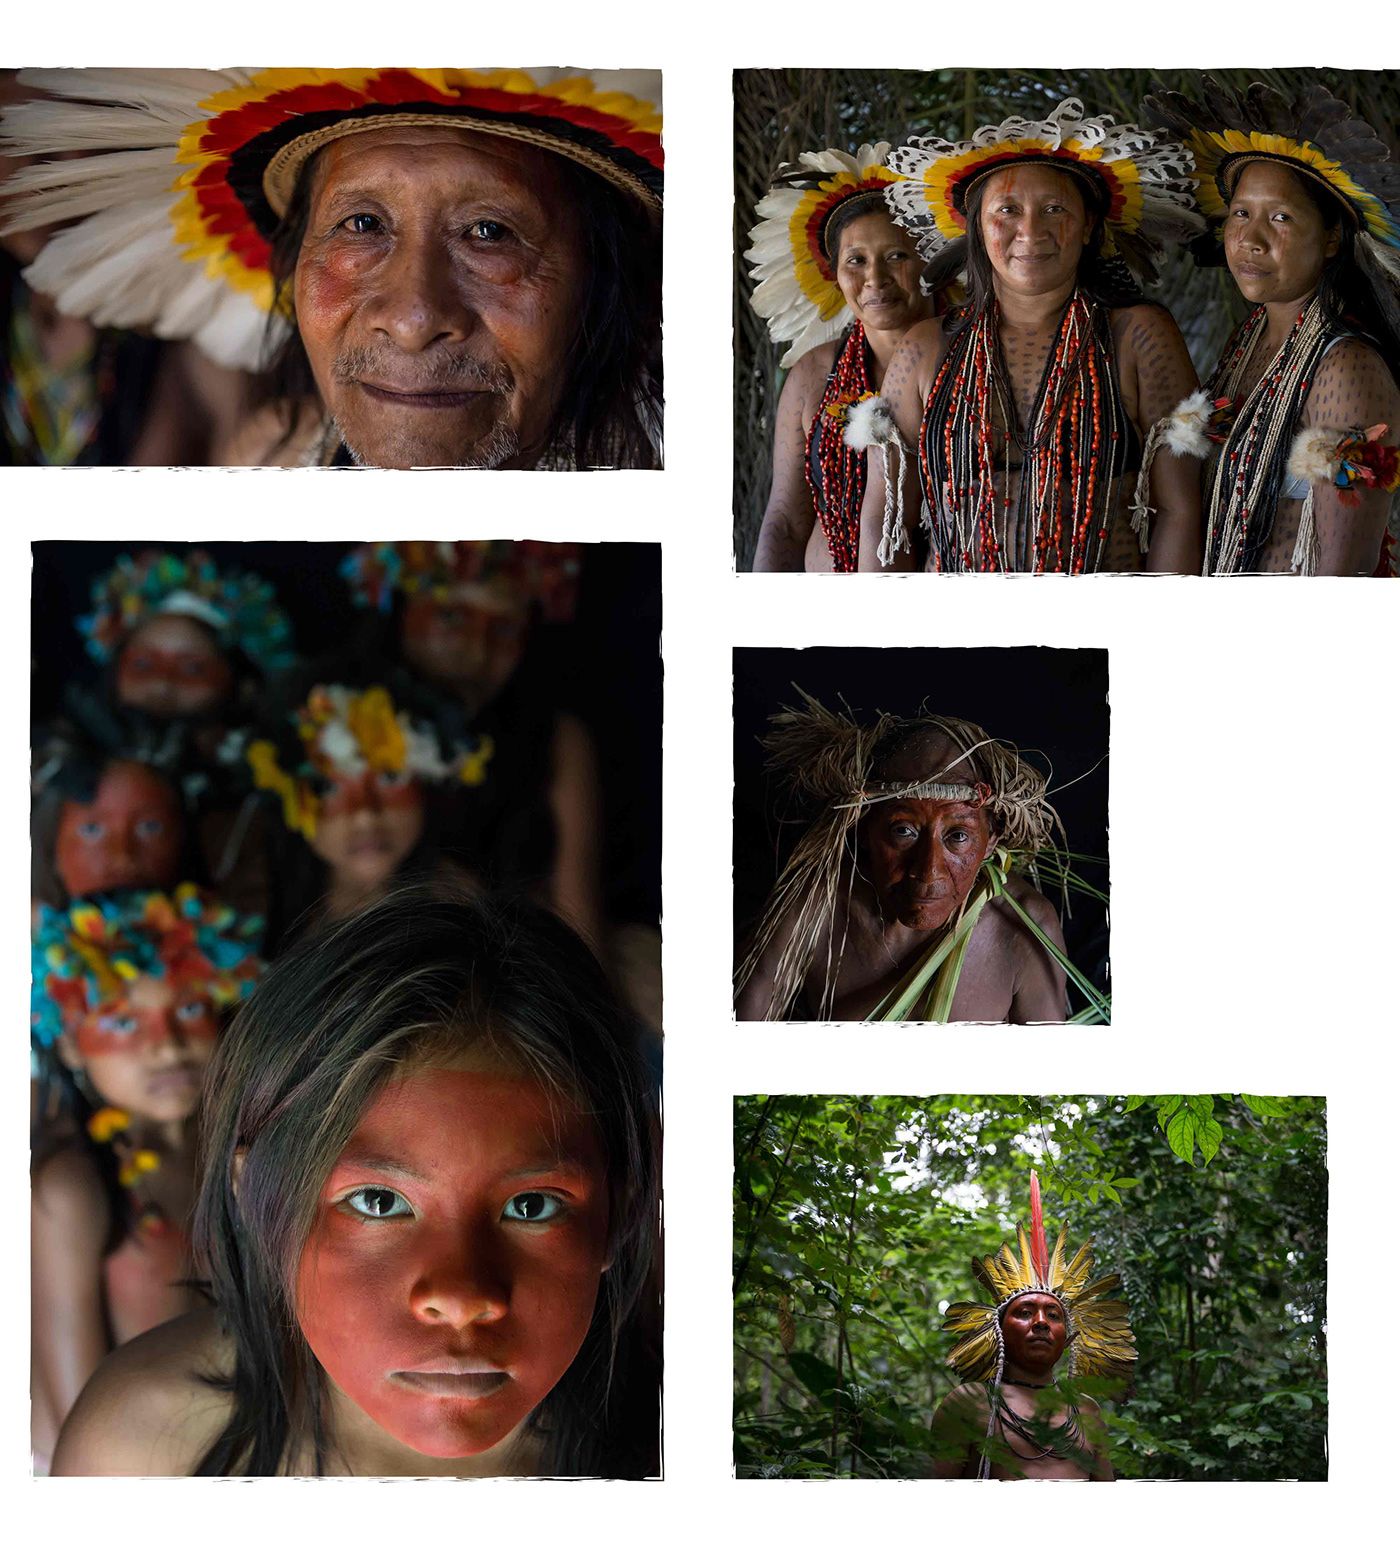 Adobe Portfolio amazonia brand design eco ecologia Ecology floresta forest france graphic design  indian Indigenas logo marque name naming Seine et Marne